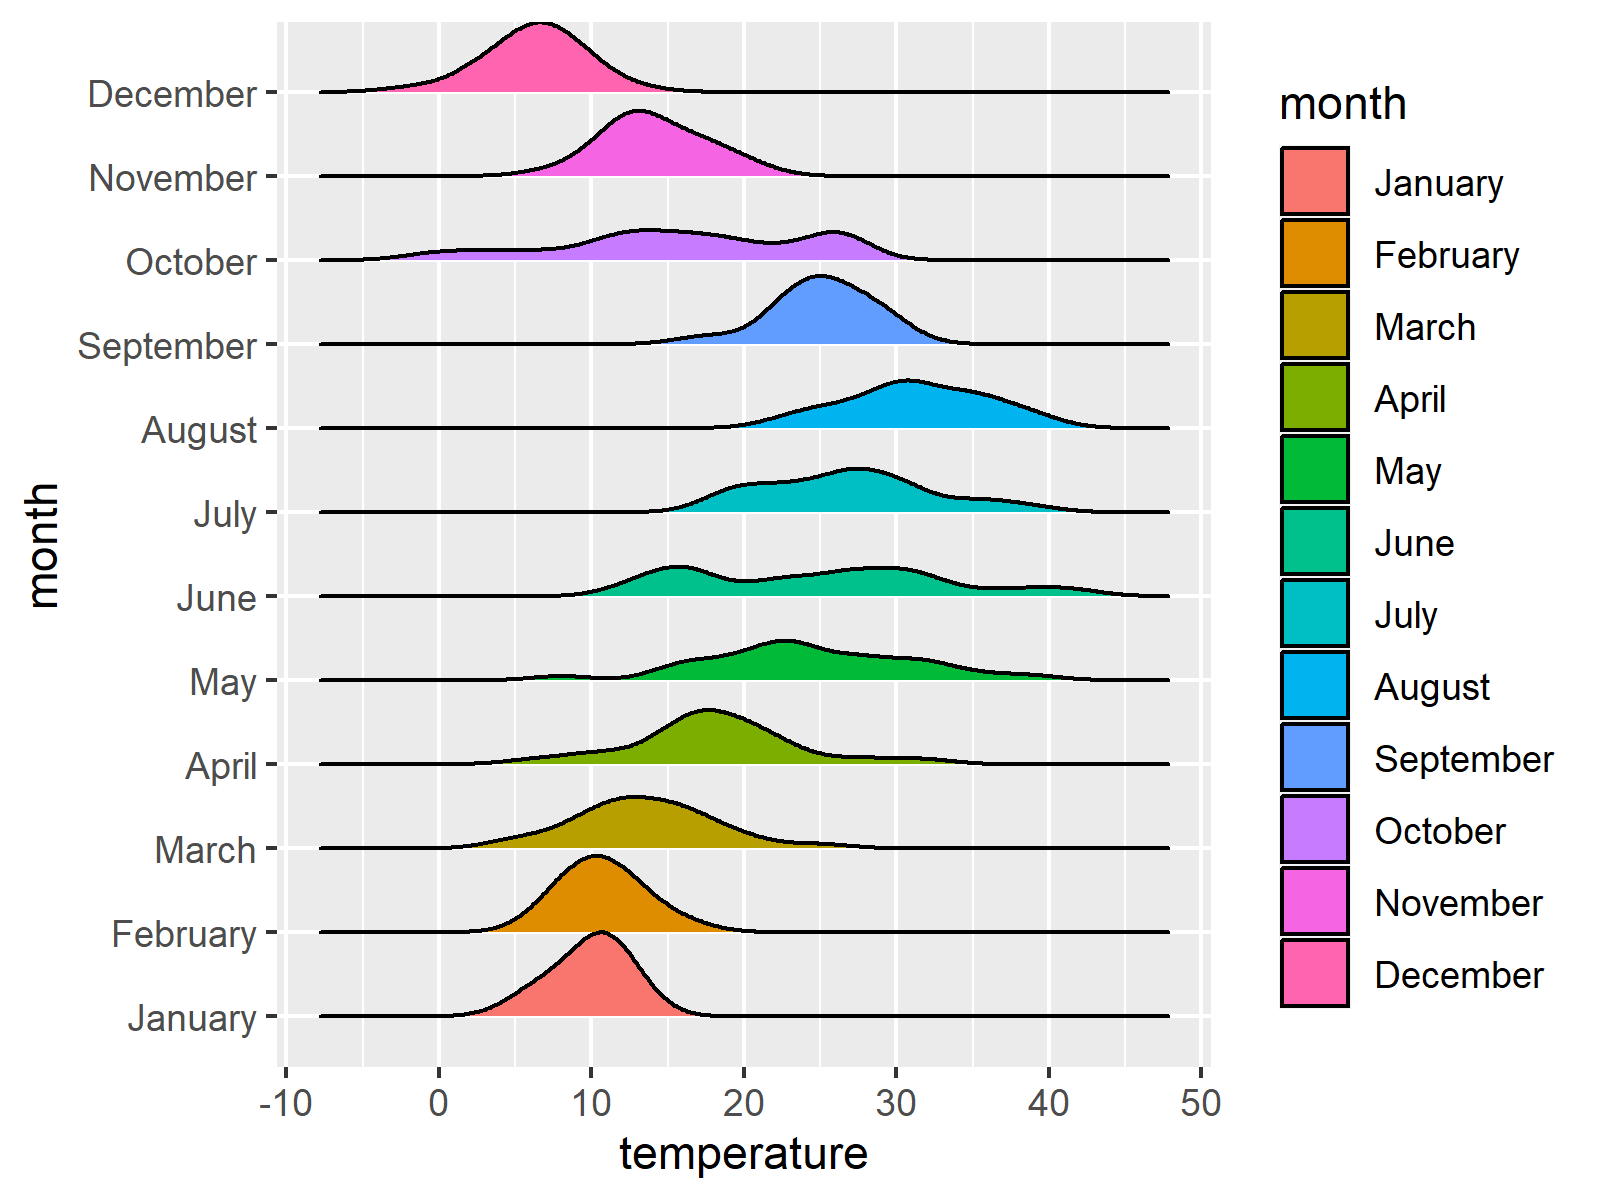 ridgeline plots figure 4